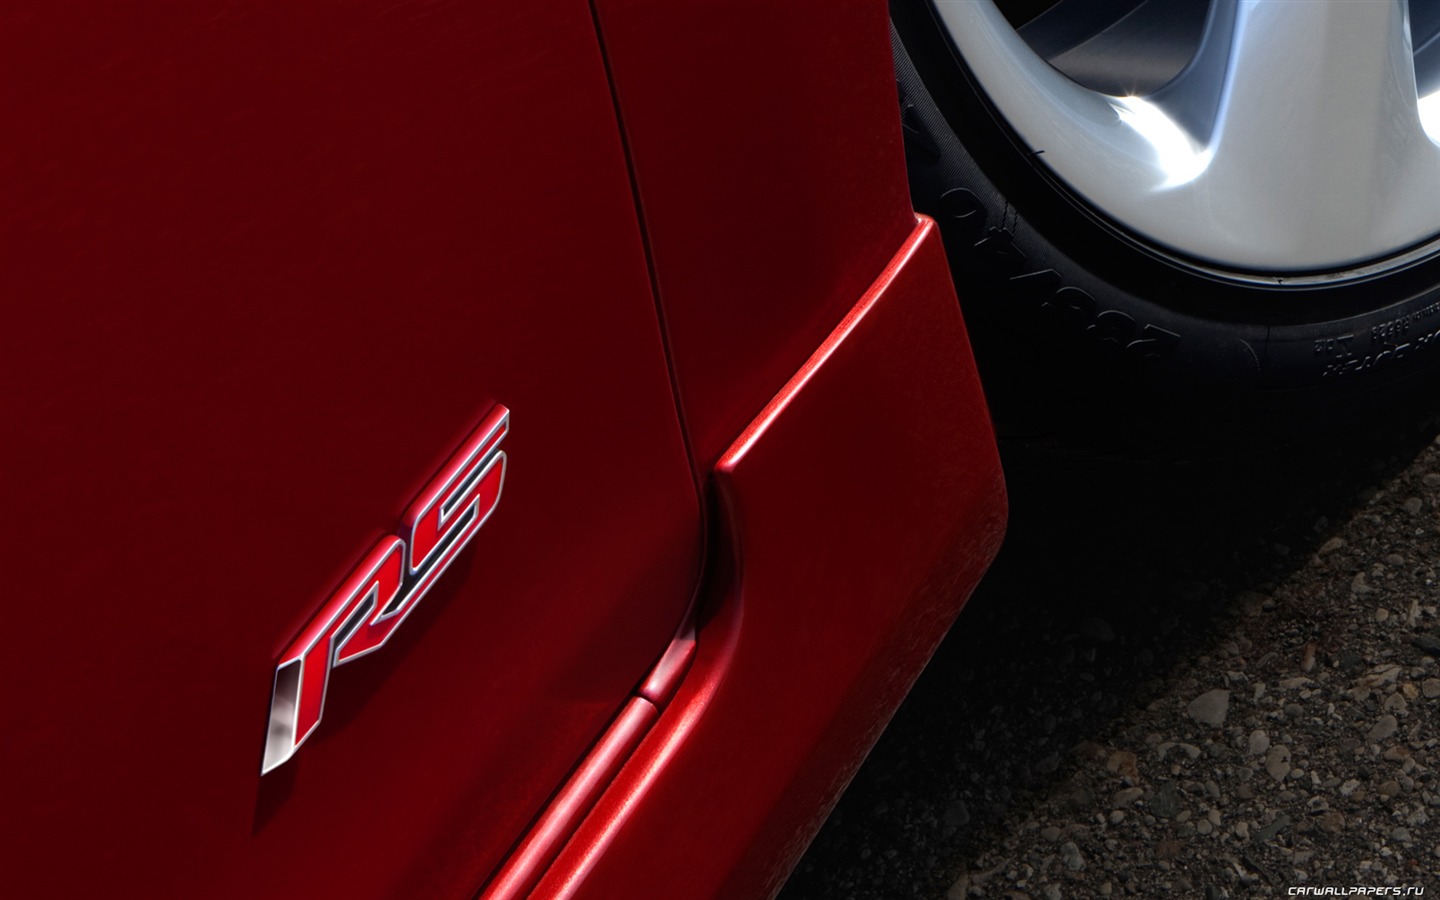 Chevrolet Cruze RS - 2011 雪佛蘭 #9 - 1440x900